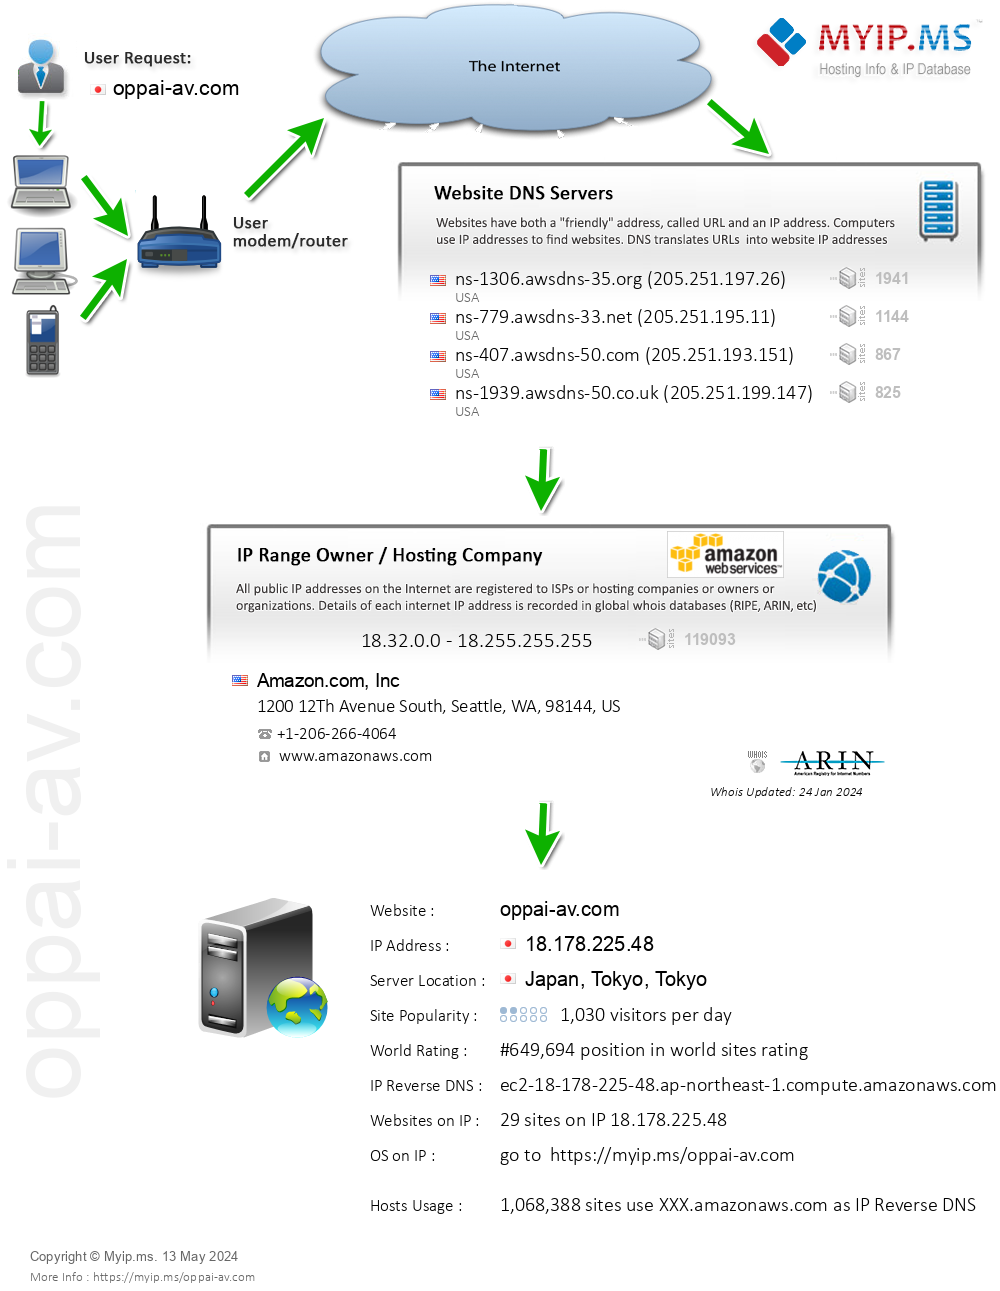 Oppai-av.com - Website Hosting Visual IP Diagram